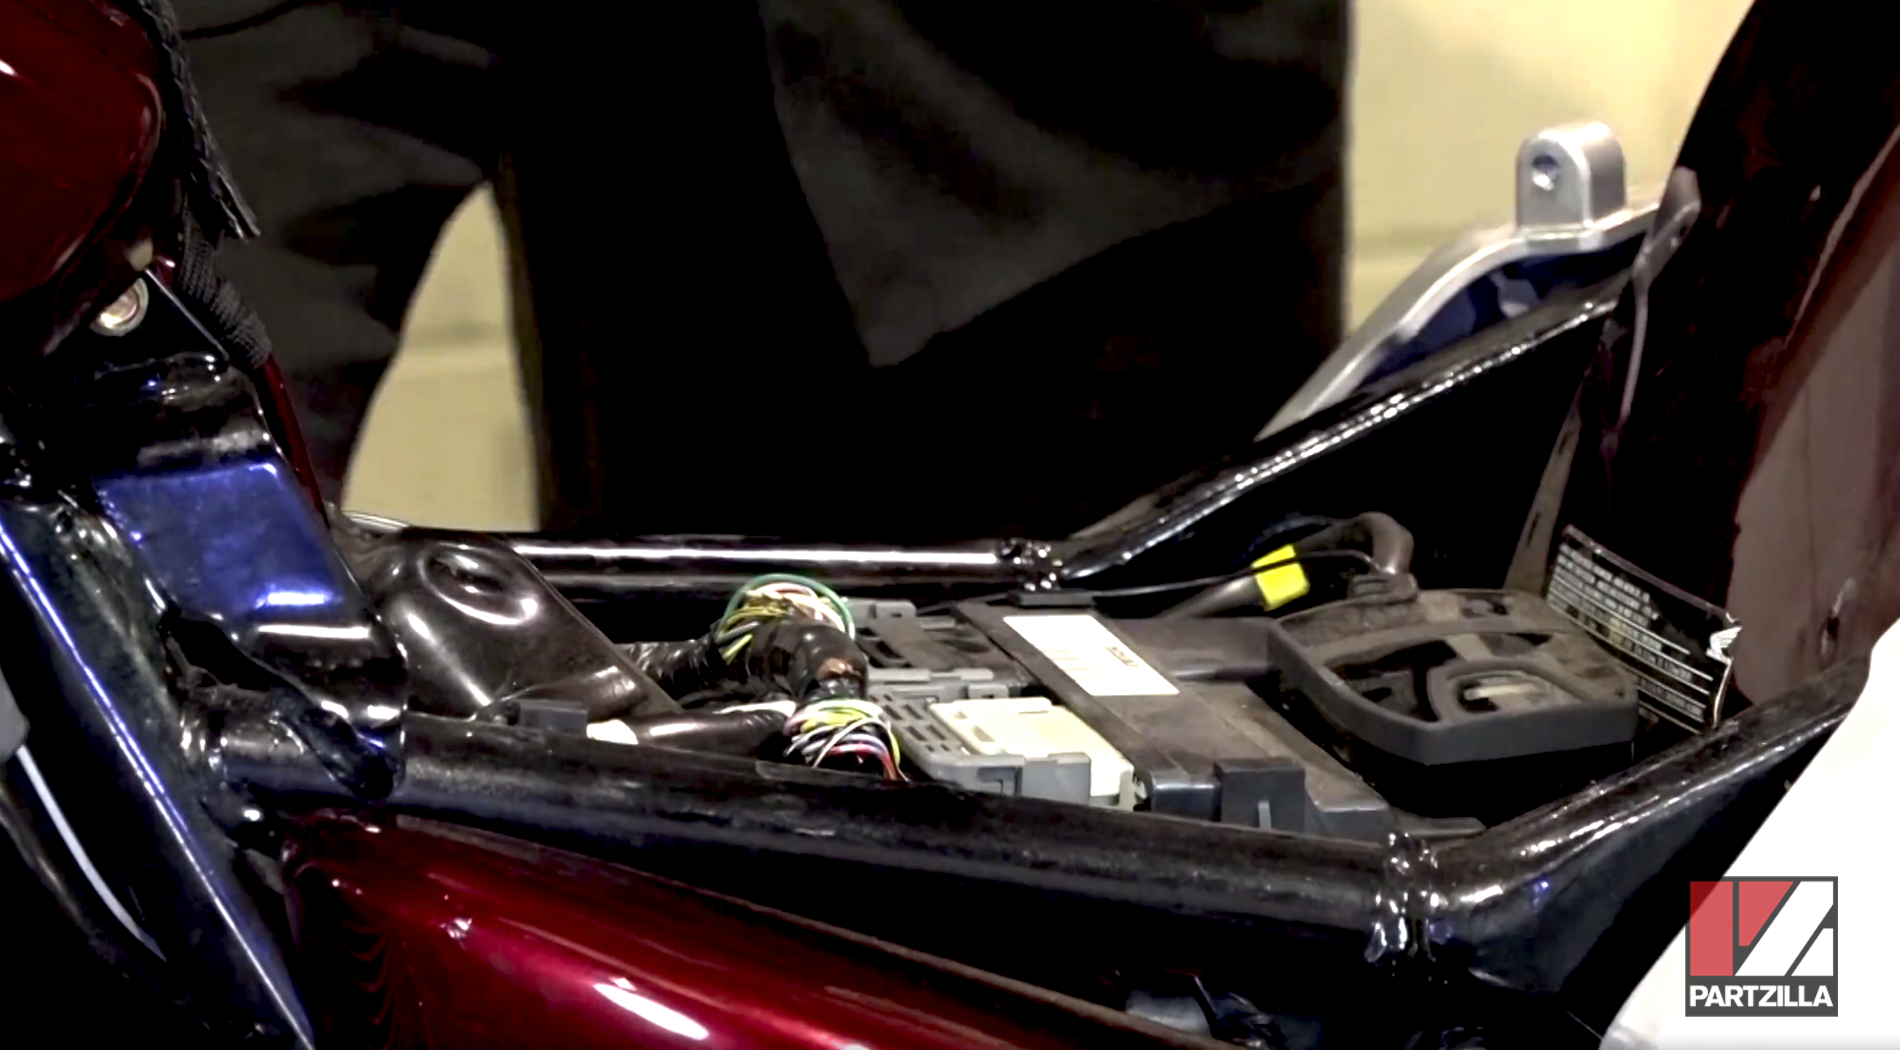 Honda VTX 1800 motorcycle battery diagnostics